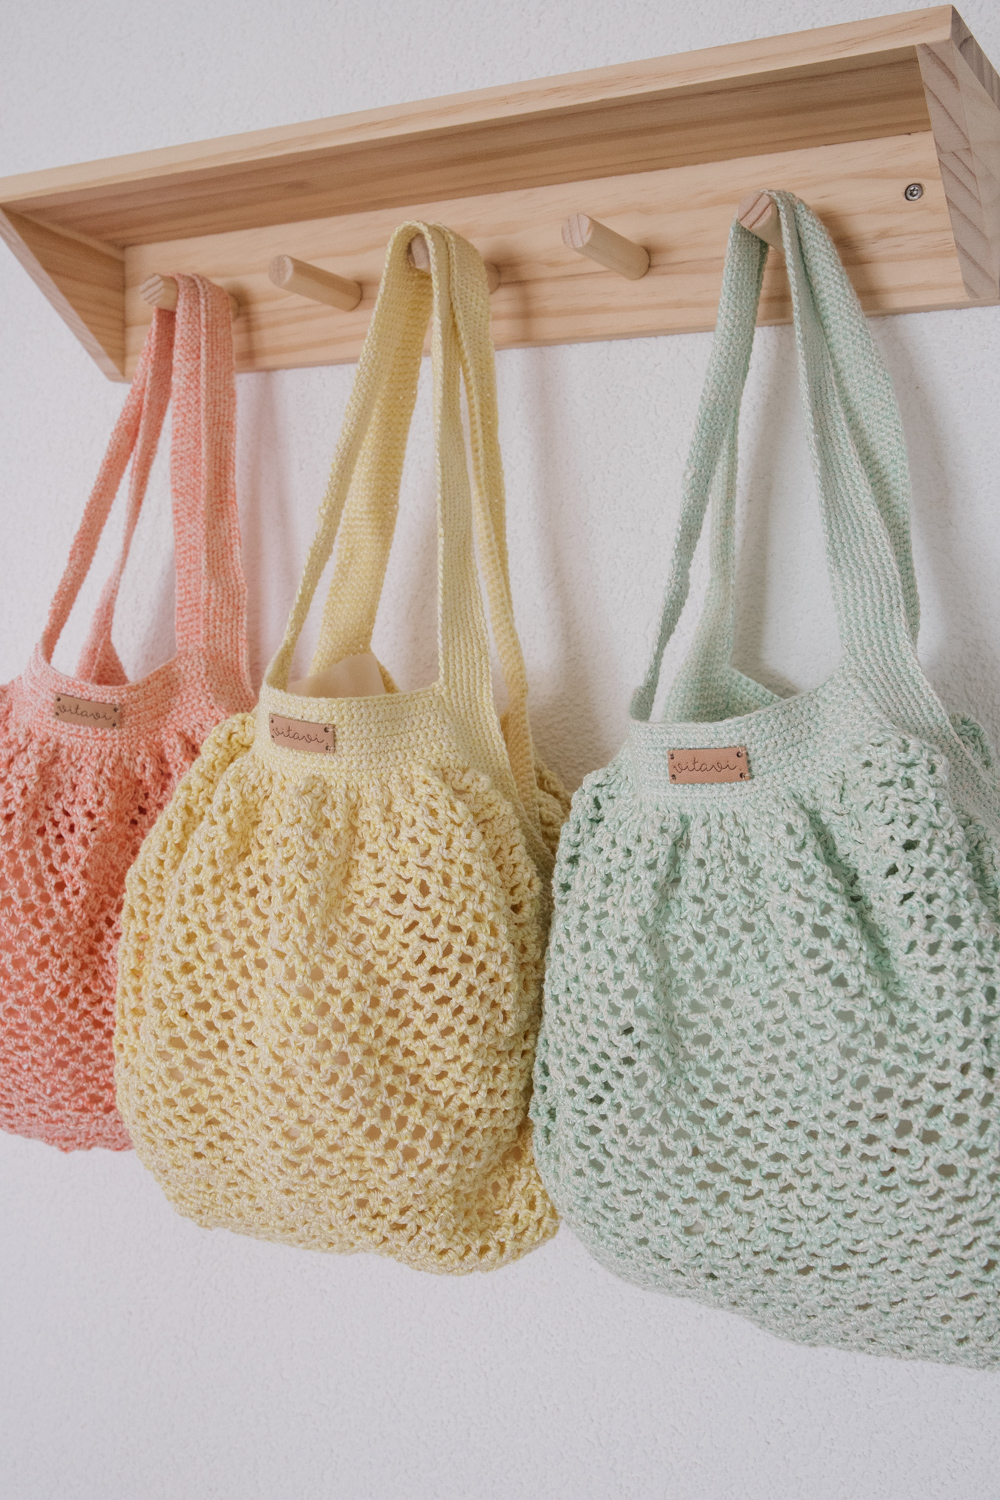 Crochet Net Bag